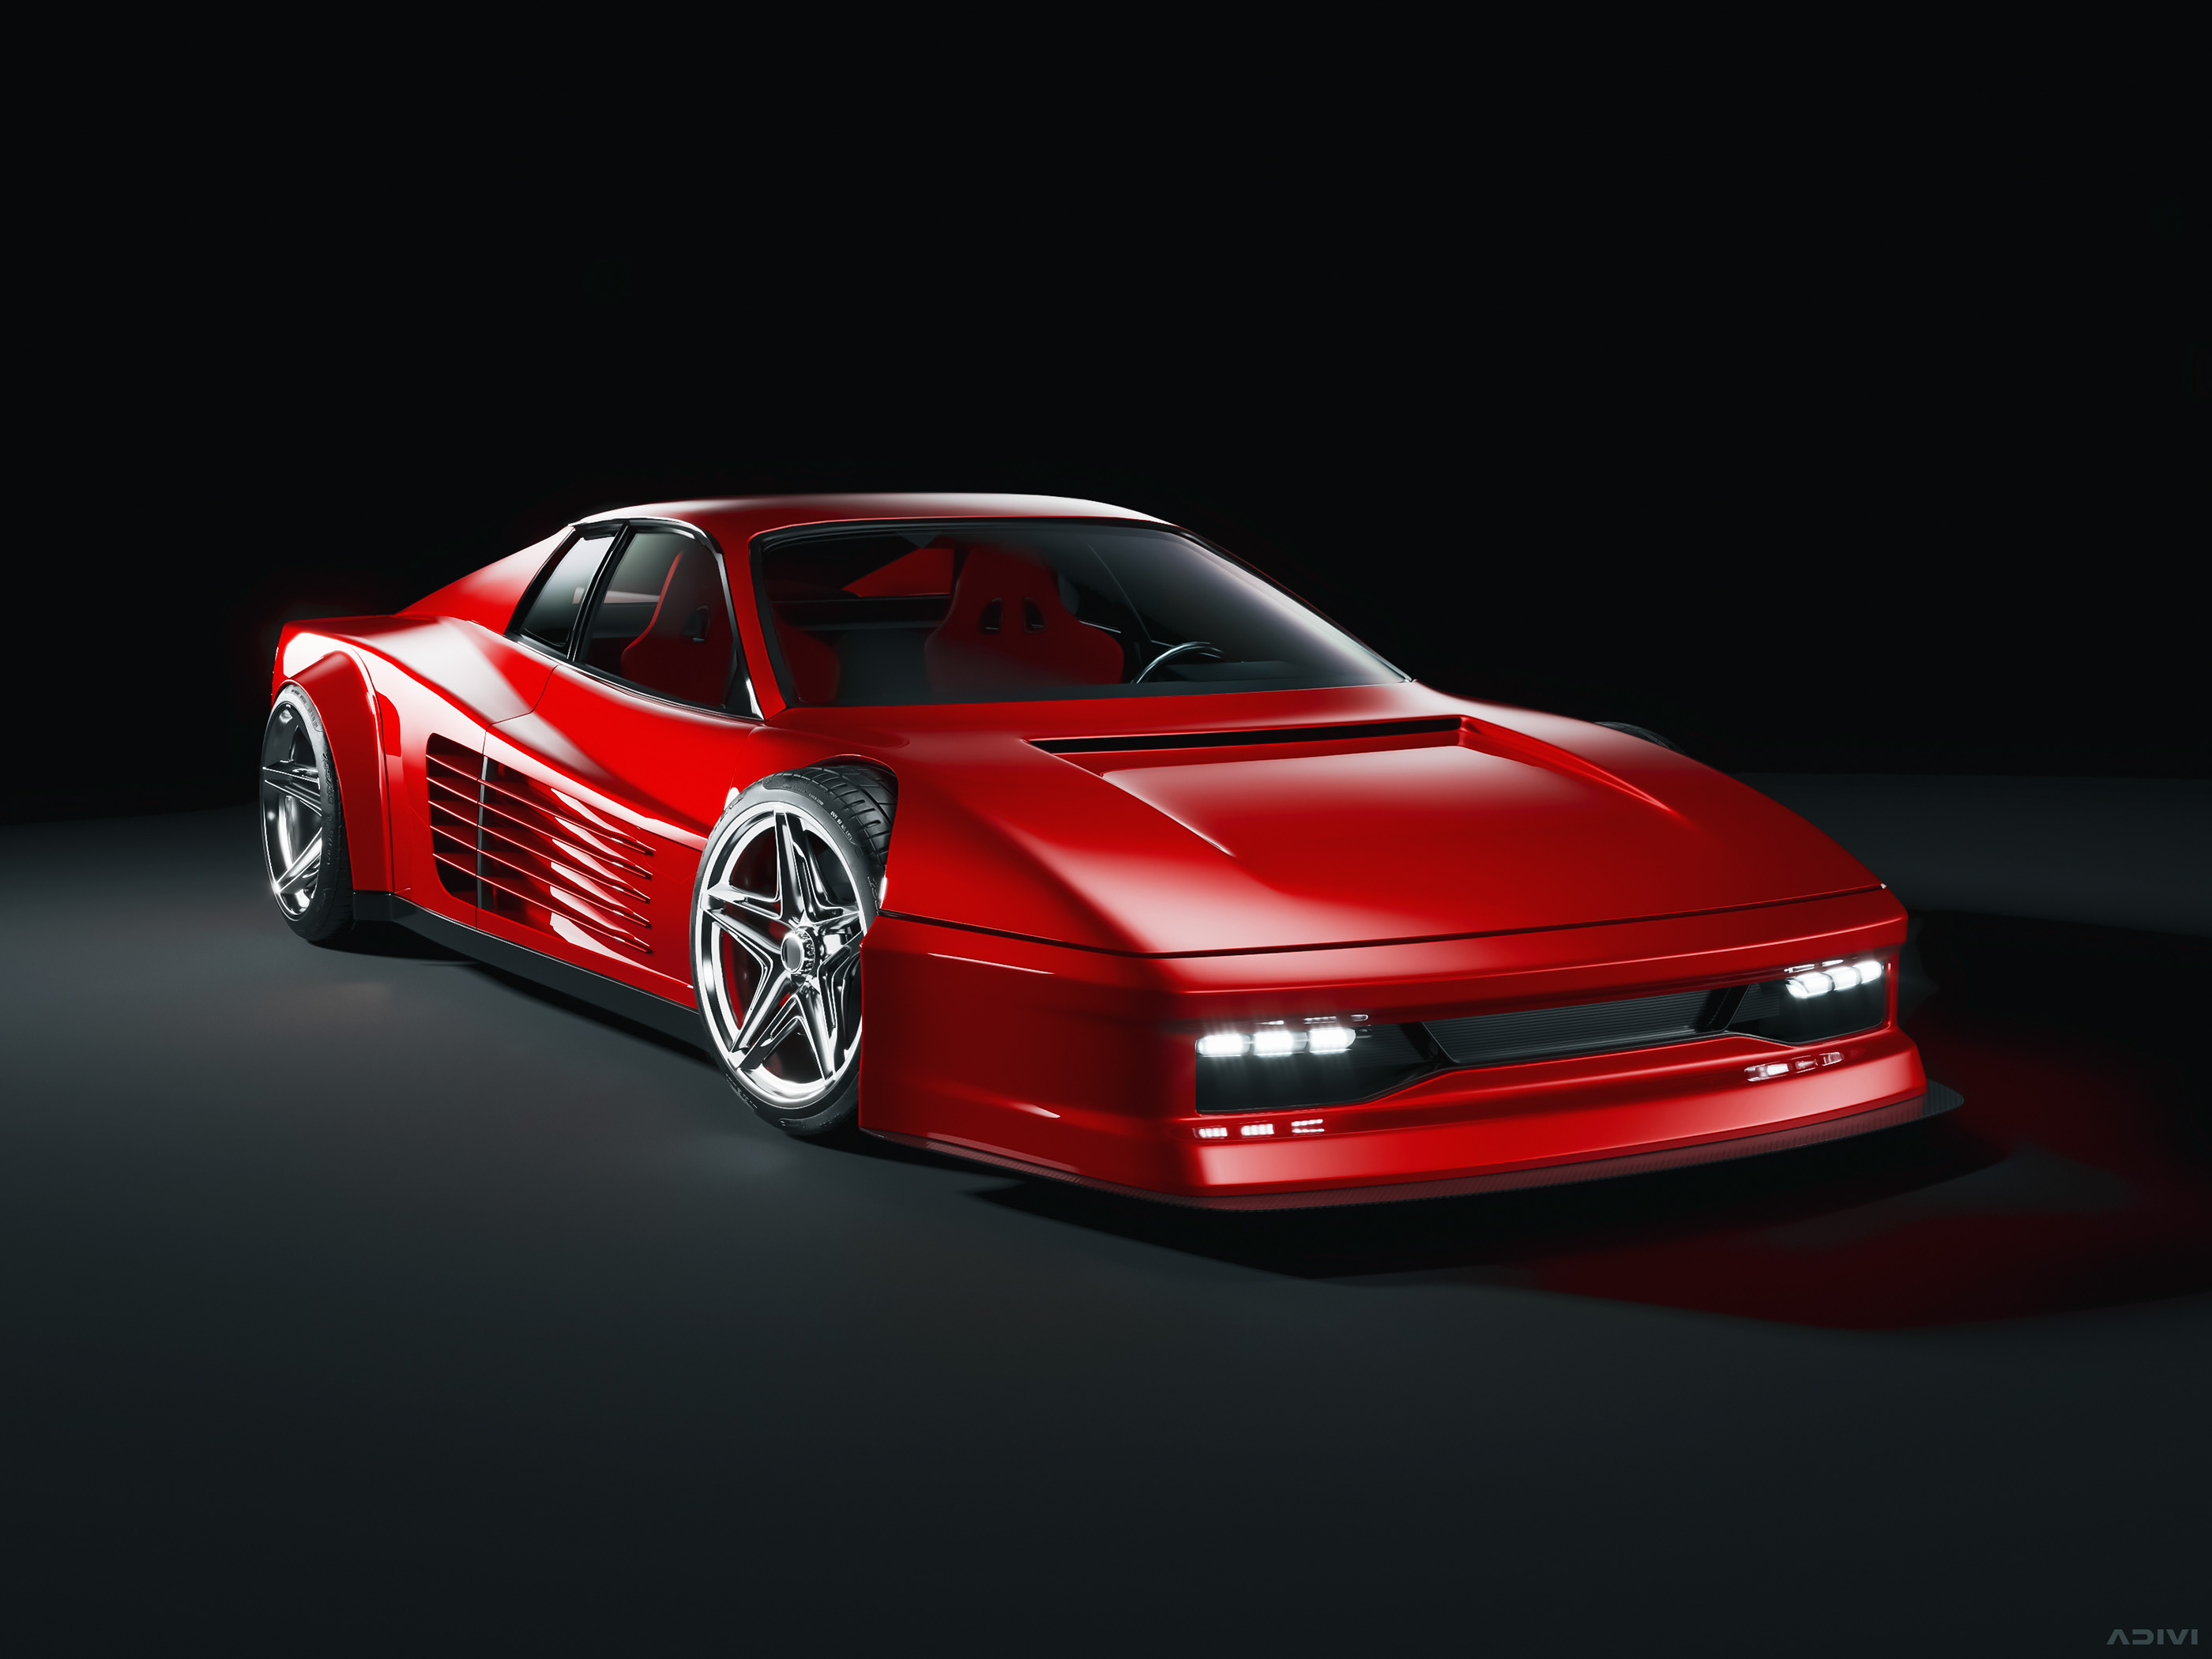 General 2800x2100 Ferrari Ferrari Testarossa concept art concept cars digital art CGI artwork red cars car vehicle supercars italian cars